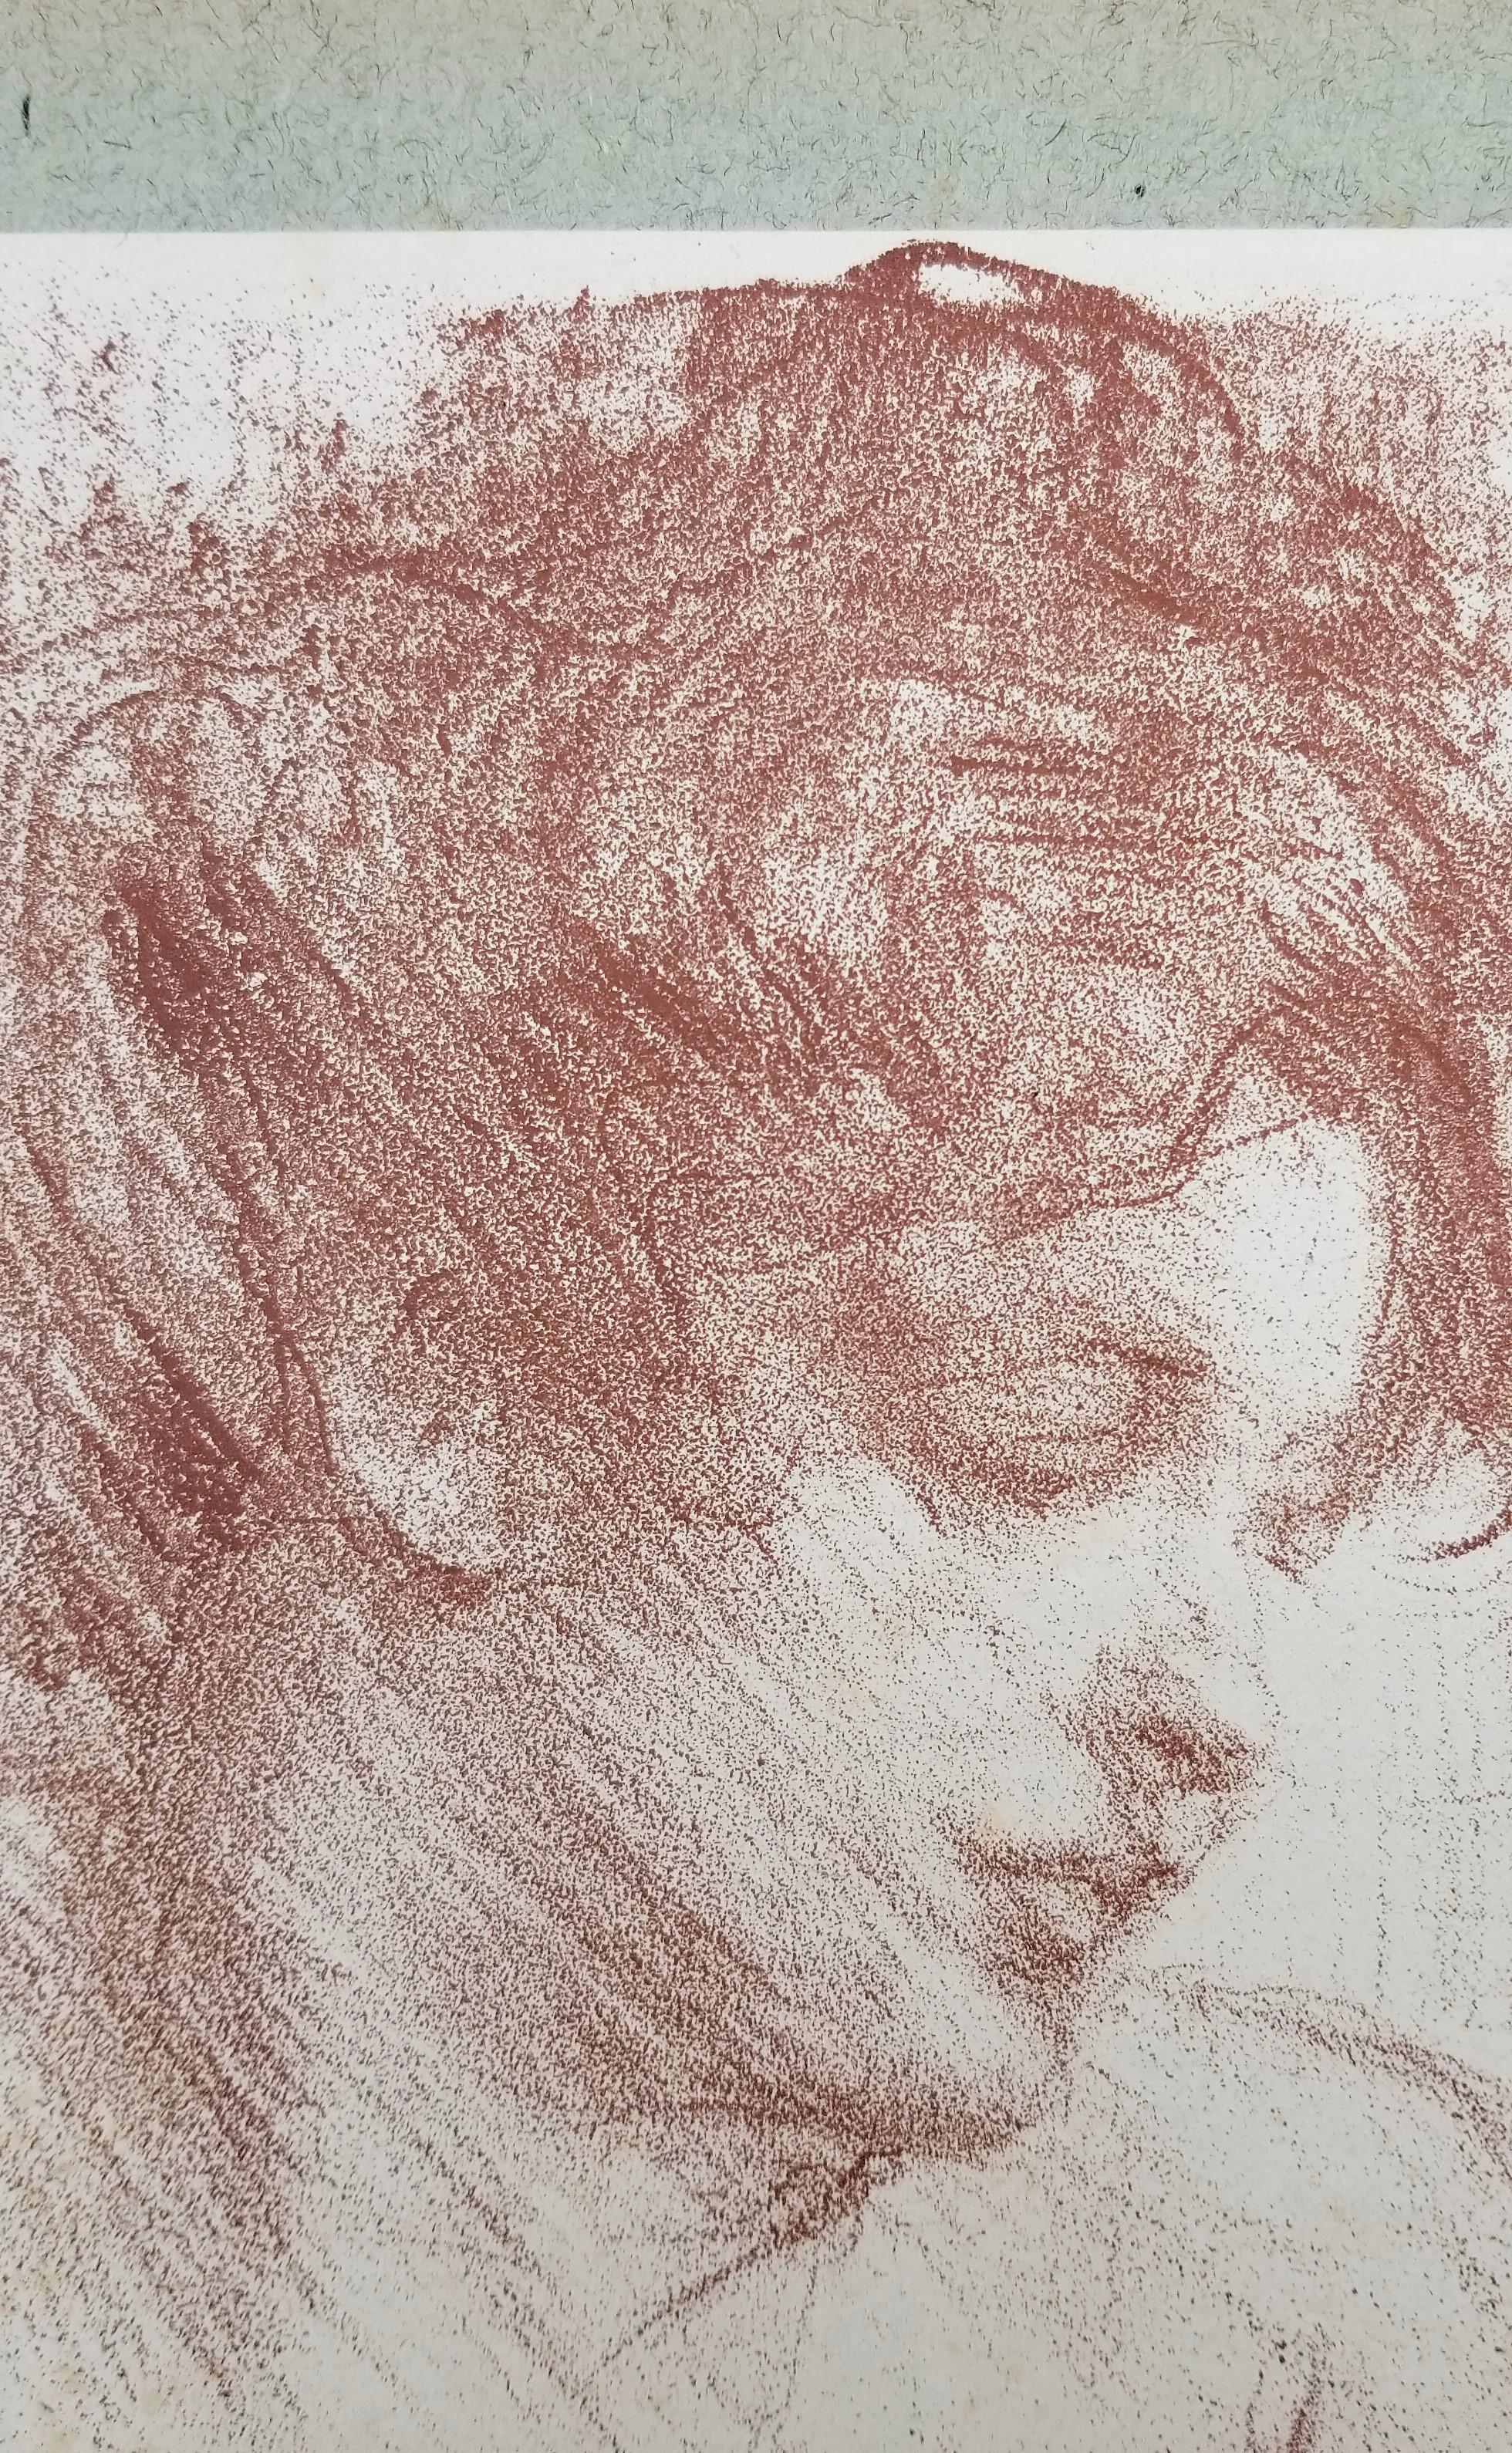 Etude (Study) /// Modern Art Portrait Lithograph Impressionist Red Lady Woman 1